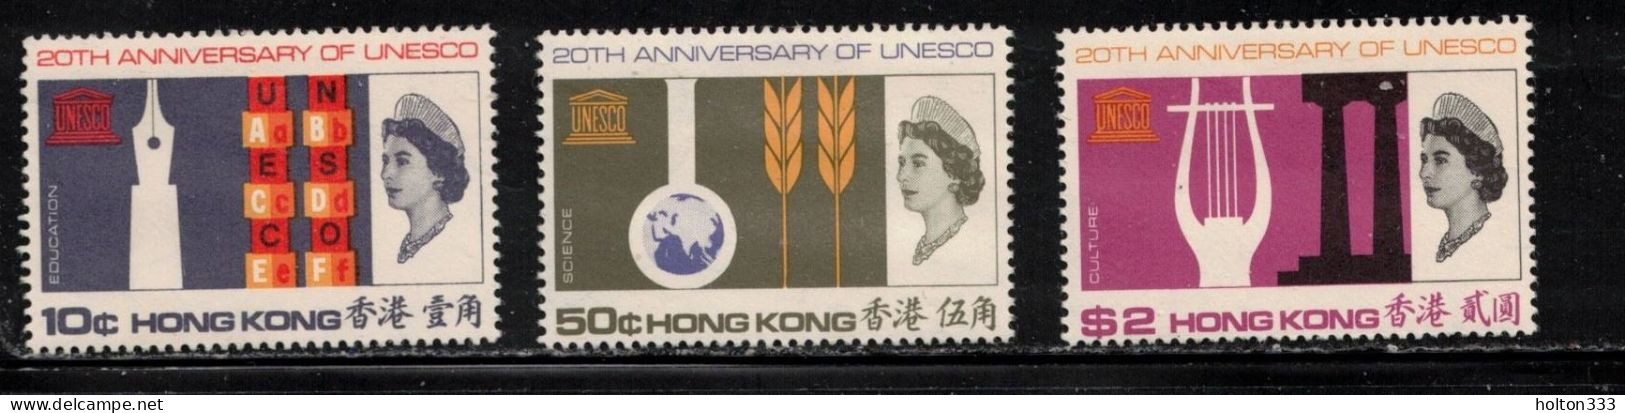 HONG KONG Scott # 231-3 MH - QEII 20th Anniversary Of UNESCO - Unused Stamps